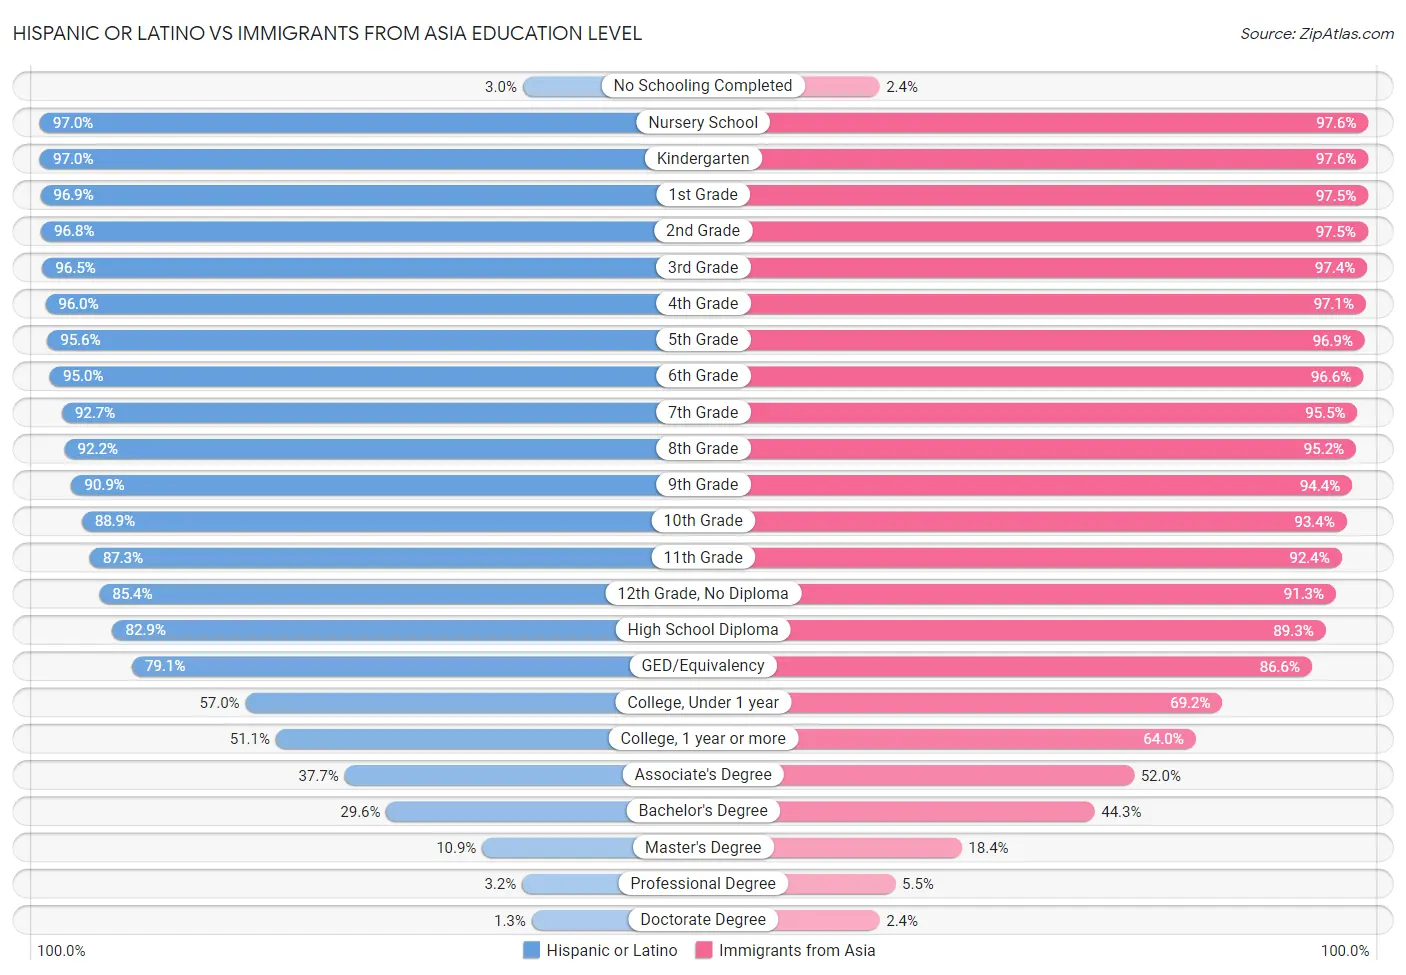 Hispanic or Latino vs Immigrants from Asia Education Level